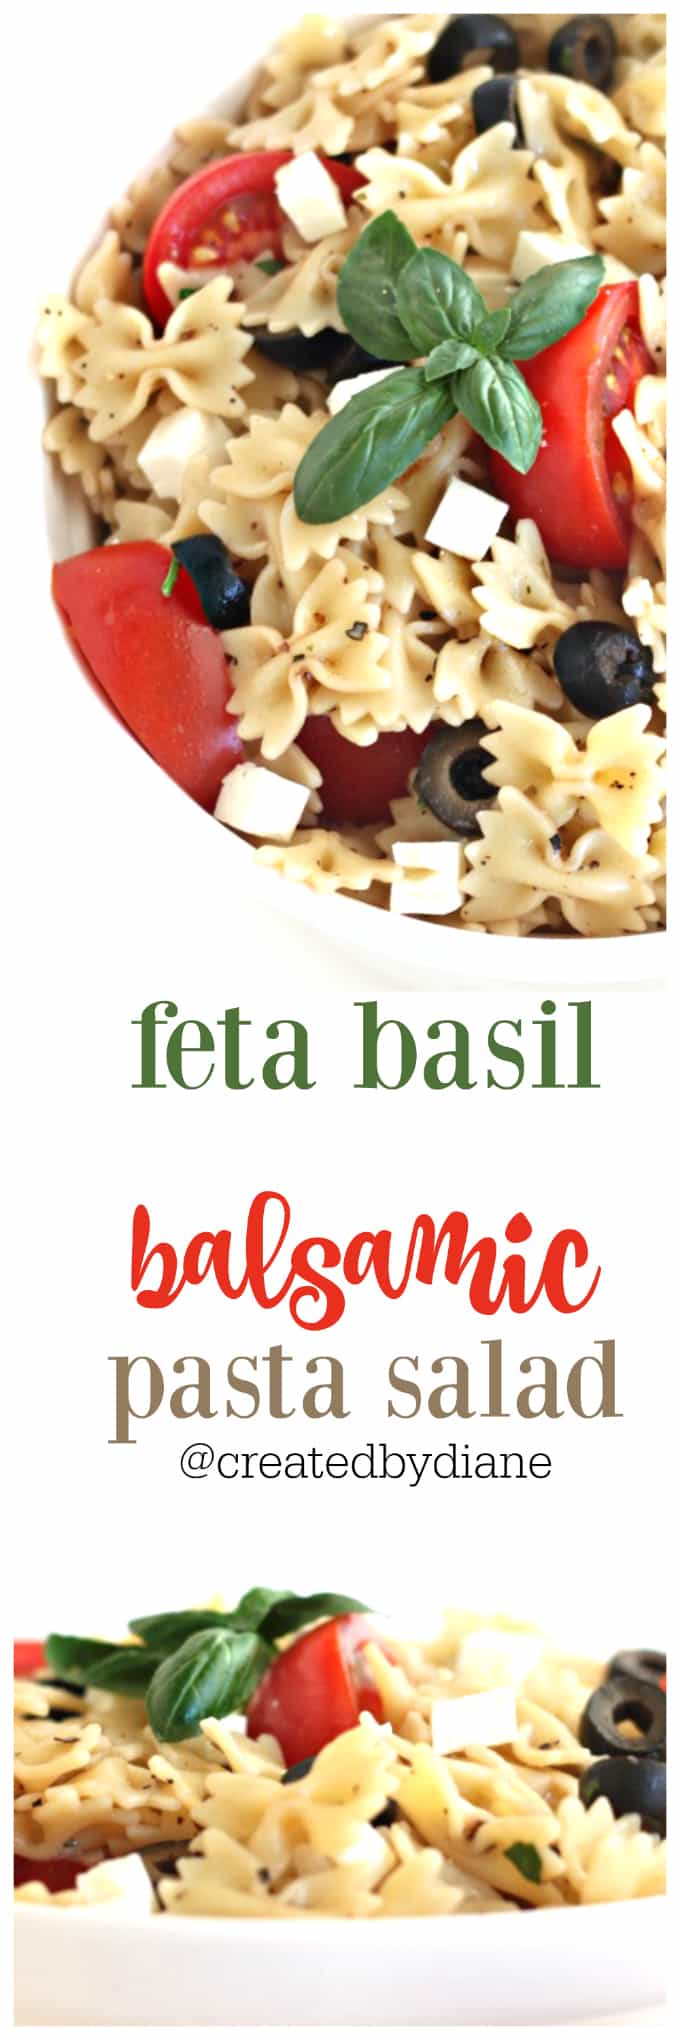 feta basil balsamic pasta salad @createdbydiane